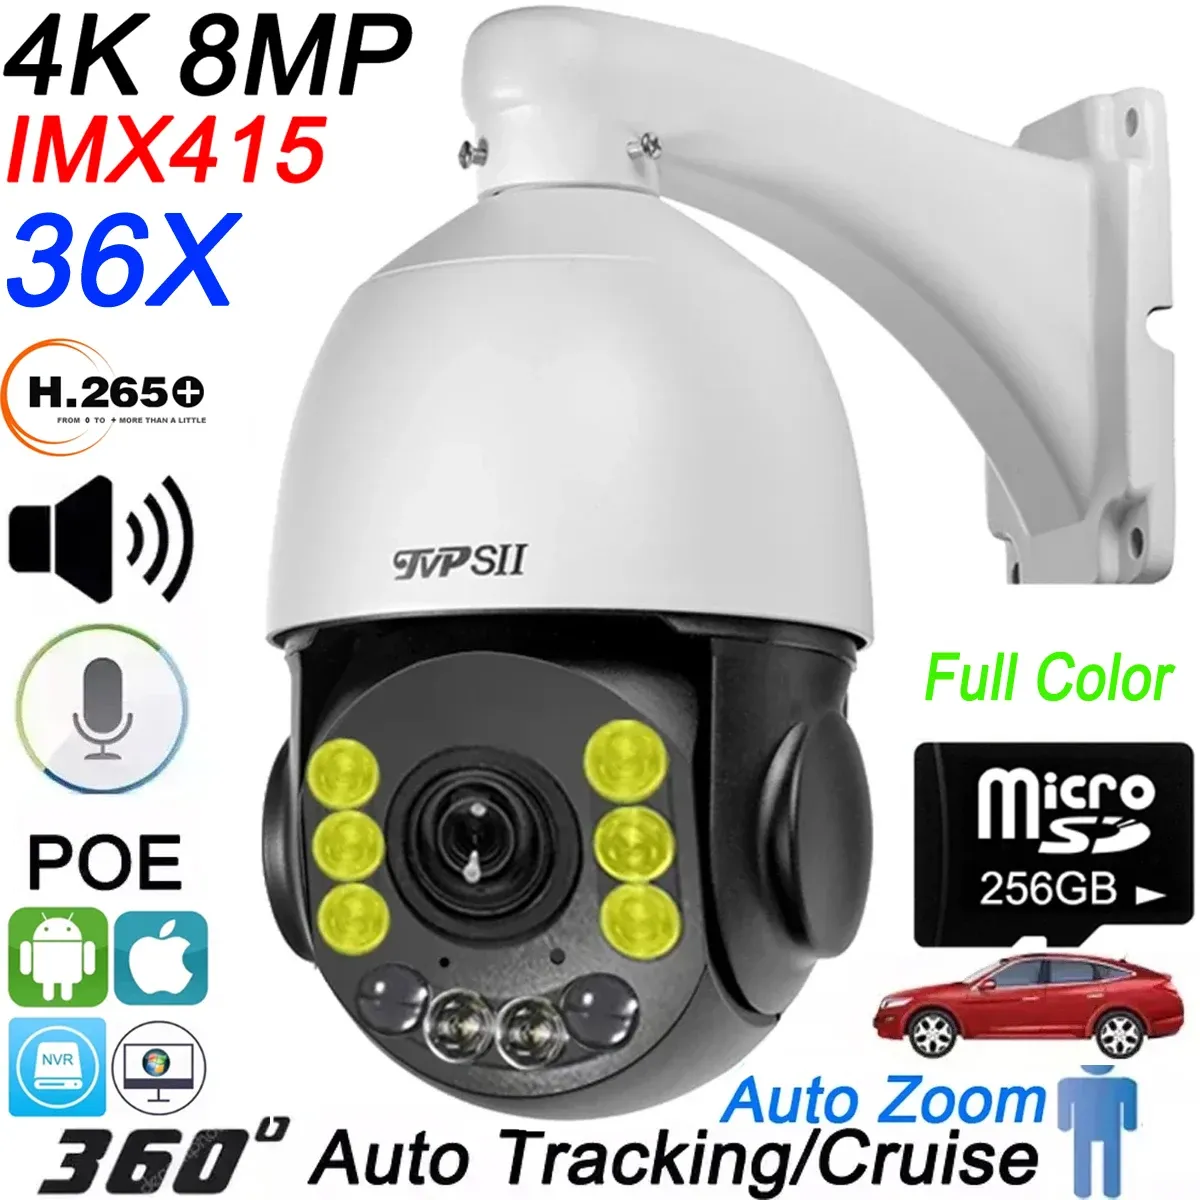 Lens Full Color Auto Tracking Cruise 8MP 4K 36X Optical Zoom Rotation Audio Outdoor ONVIF POE PTZ IP Surveillance Speed Doom Camera